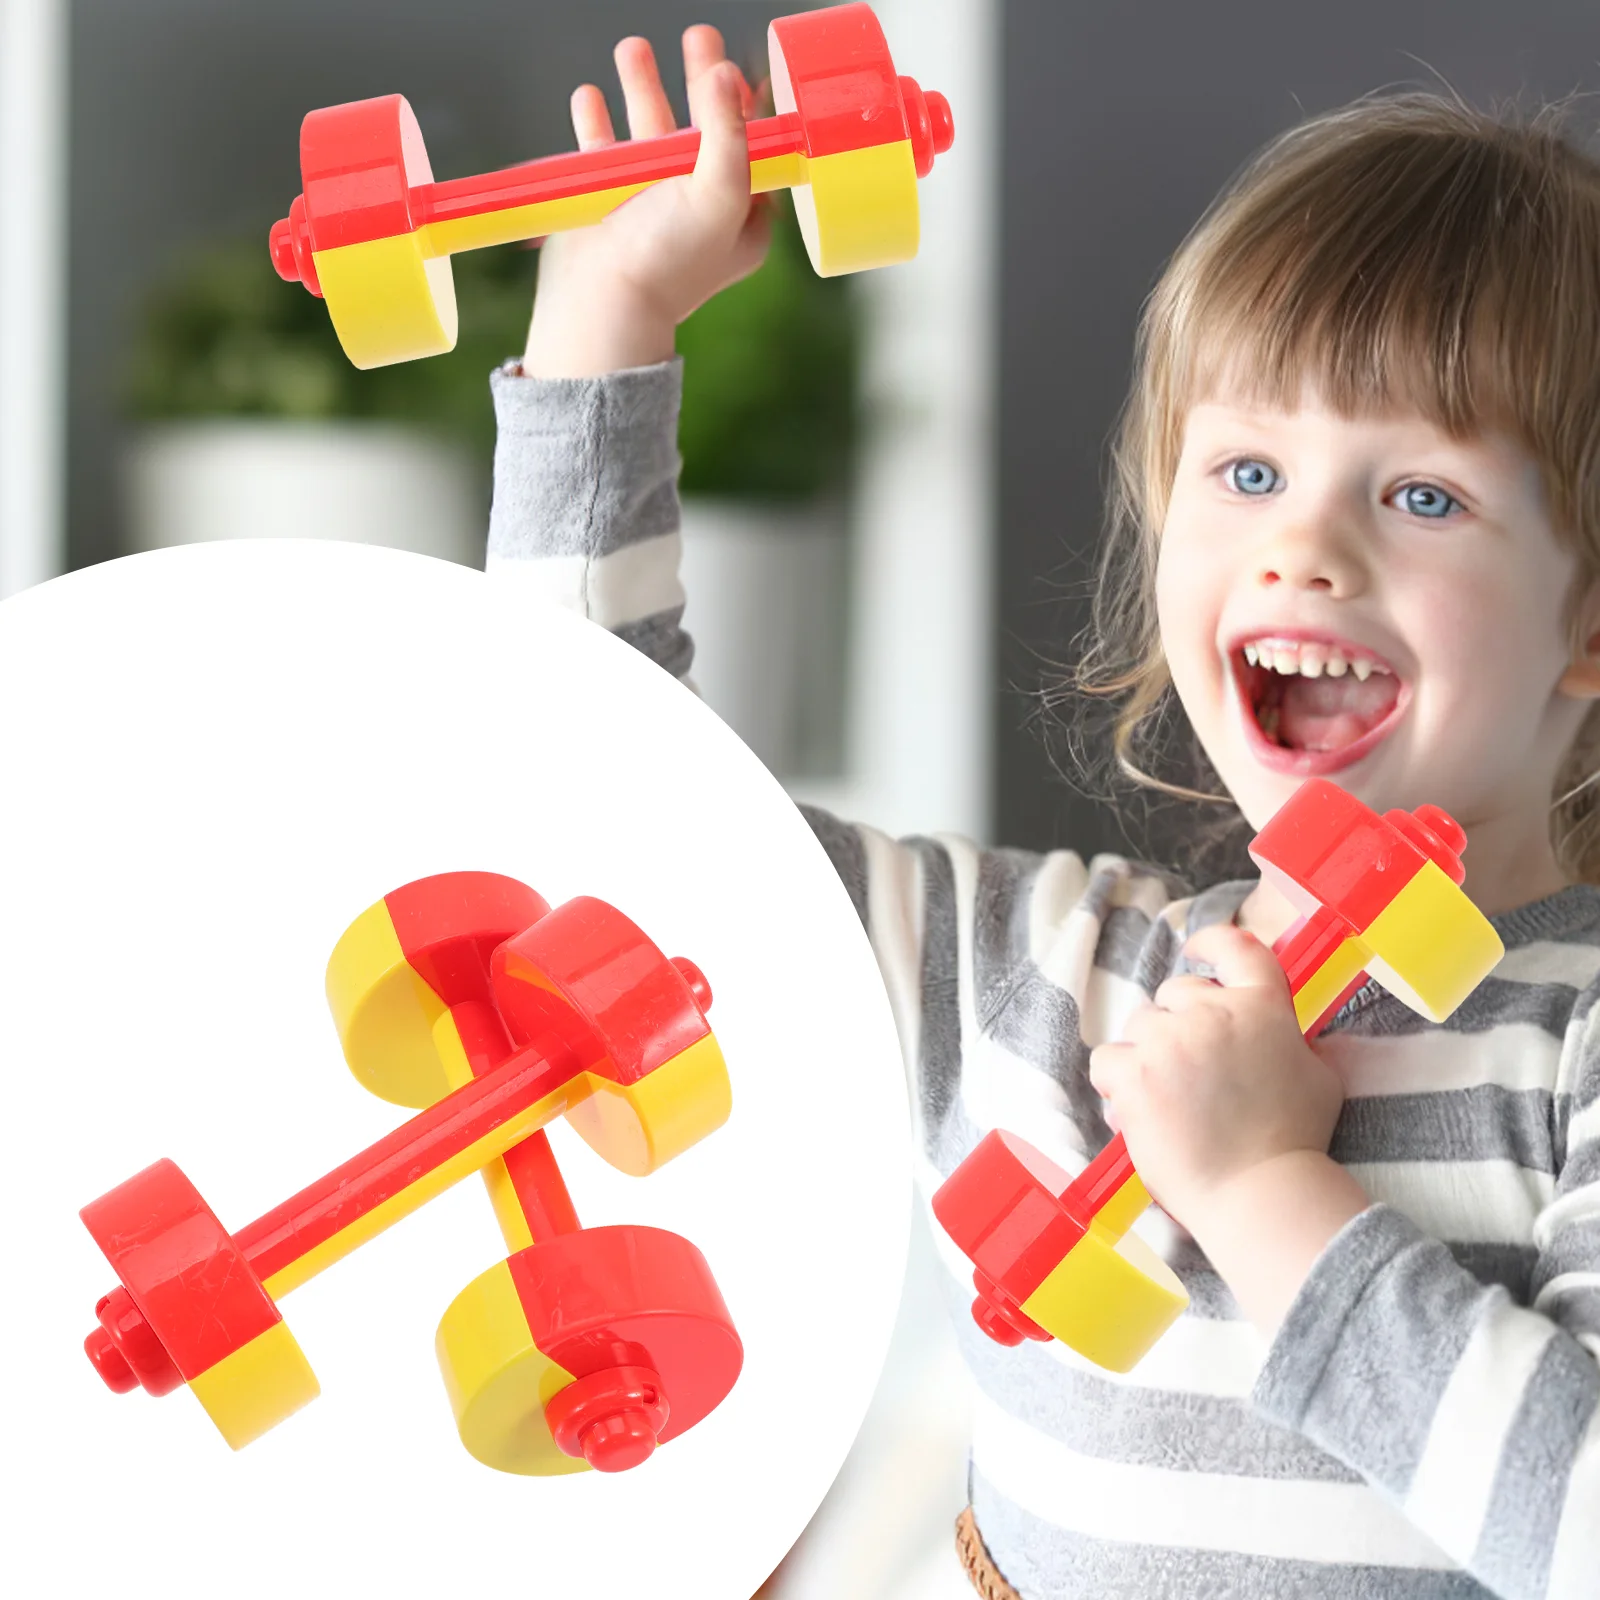 

Kids Toy Children Barbells Weights Exercise Gym Toys Dumbbell Equipment Fitness Barbell Dumbbells Workout Pretend Beginner Home